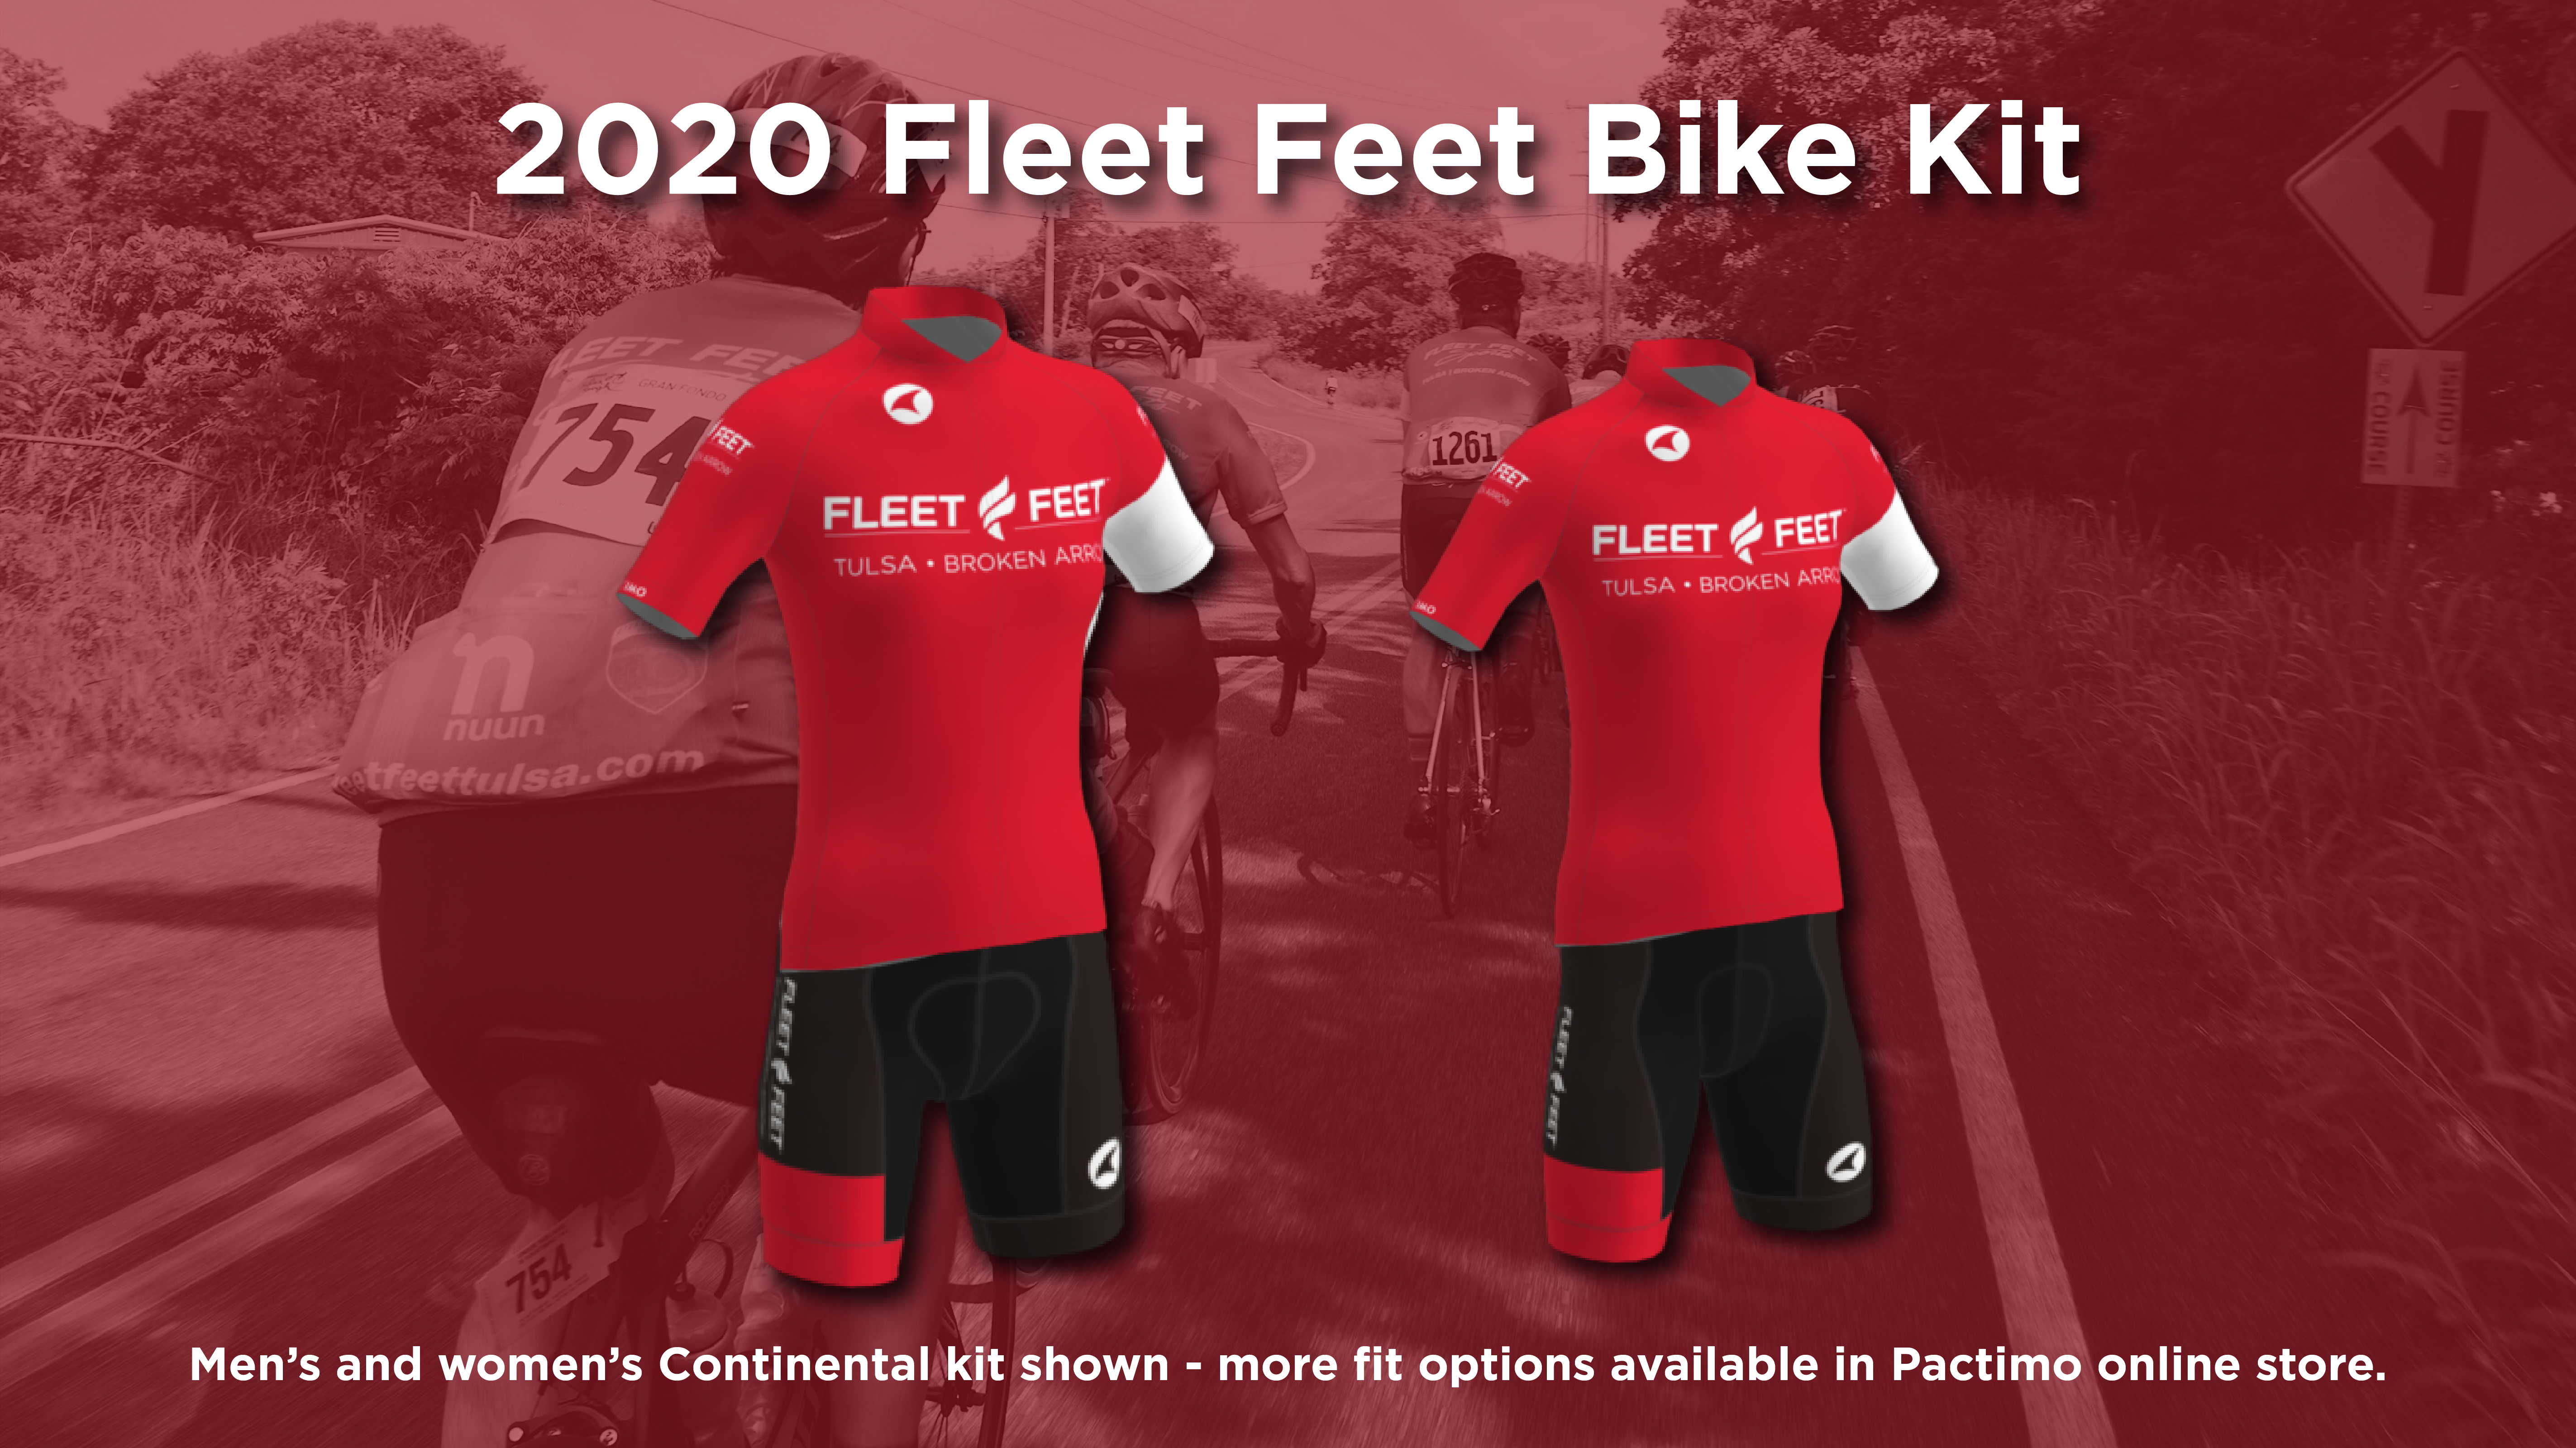 Keep Tulsa Rolling Challenge + Fleet Feet Bike Kit Fleet Feet Tulsa